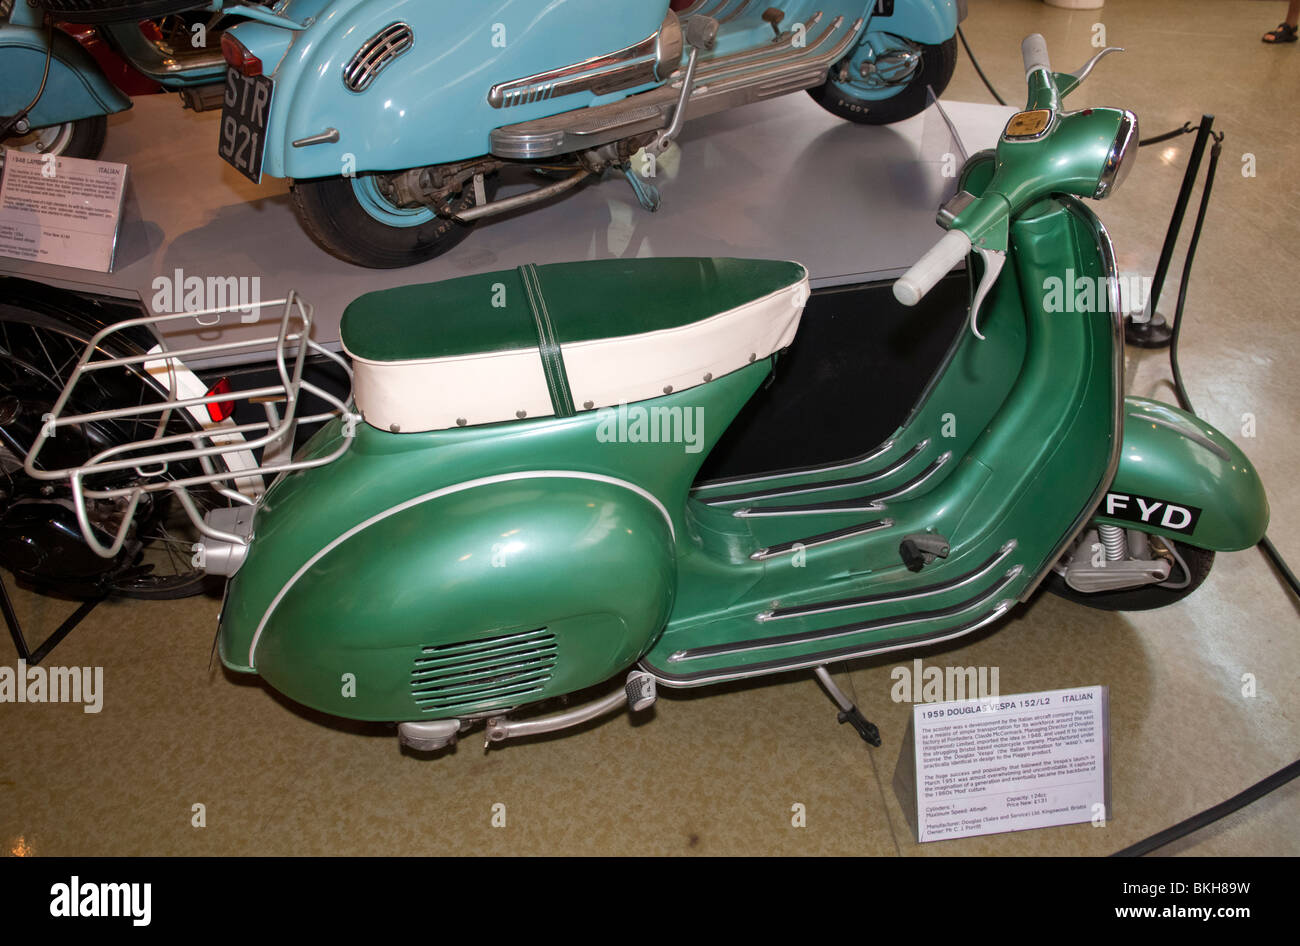 1959 Douglas scooter Vespa, National Motor Museum di Beaulieu, Hampshire - 2009 Foto Stock